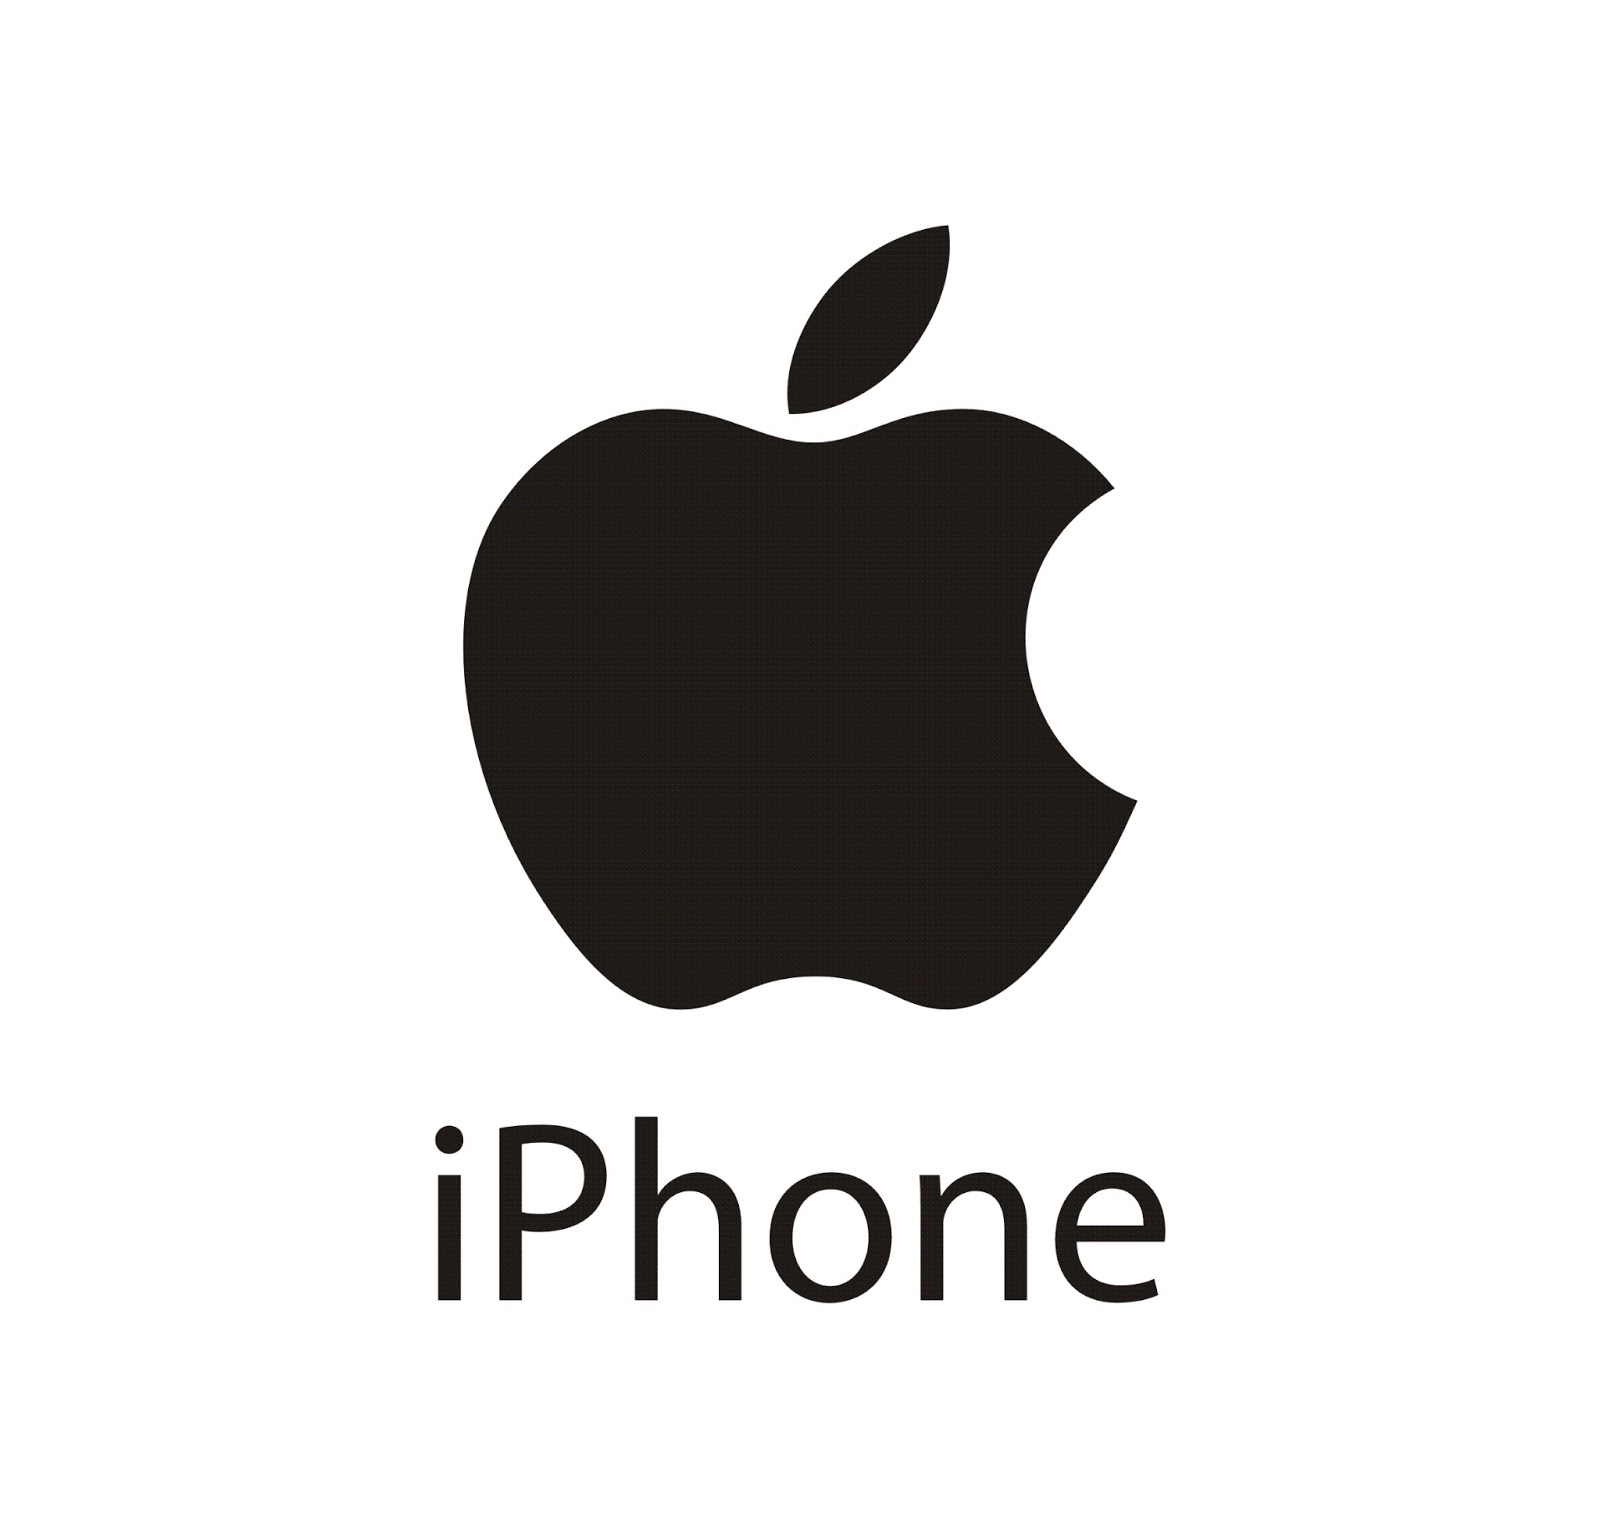 iphone logo vector